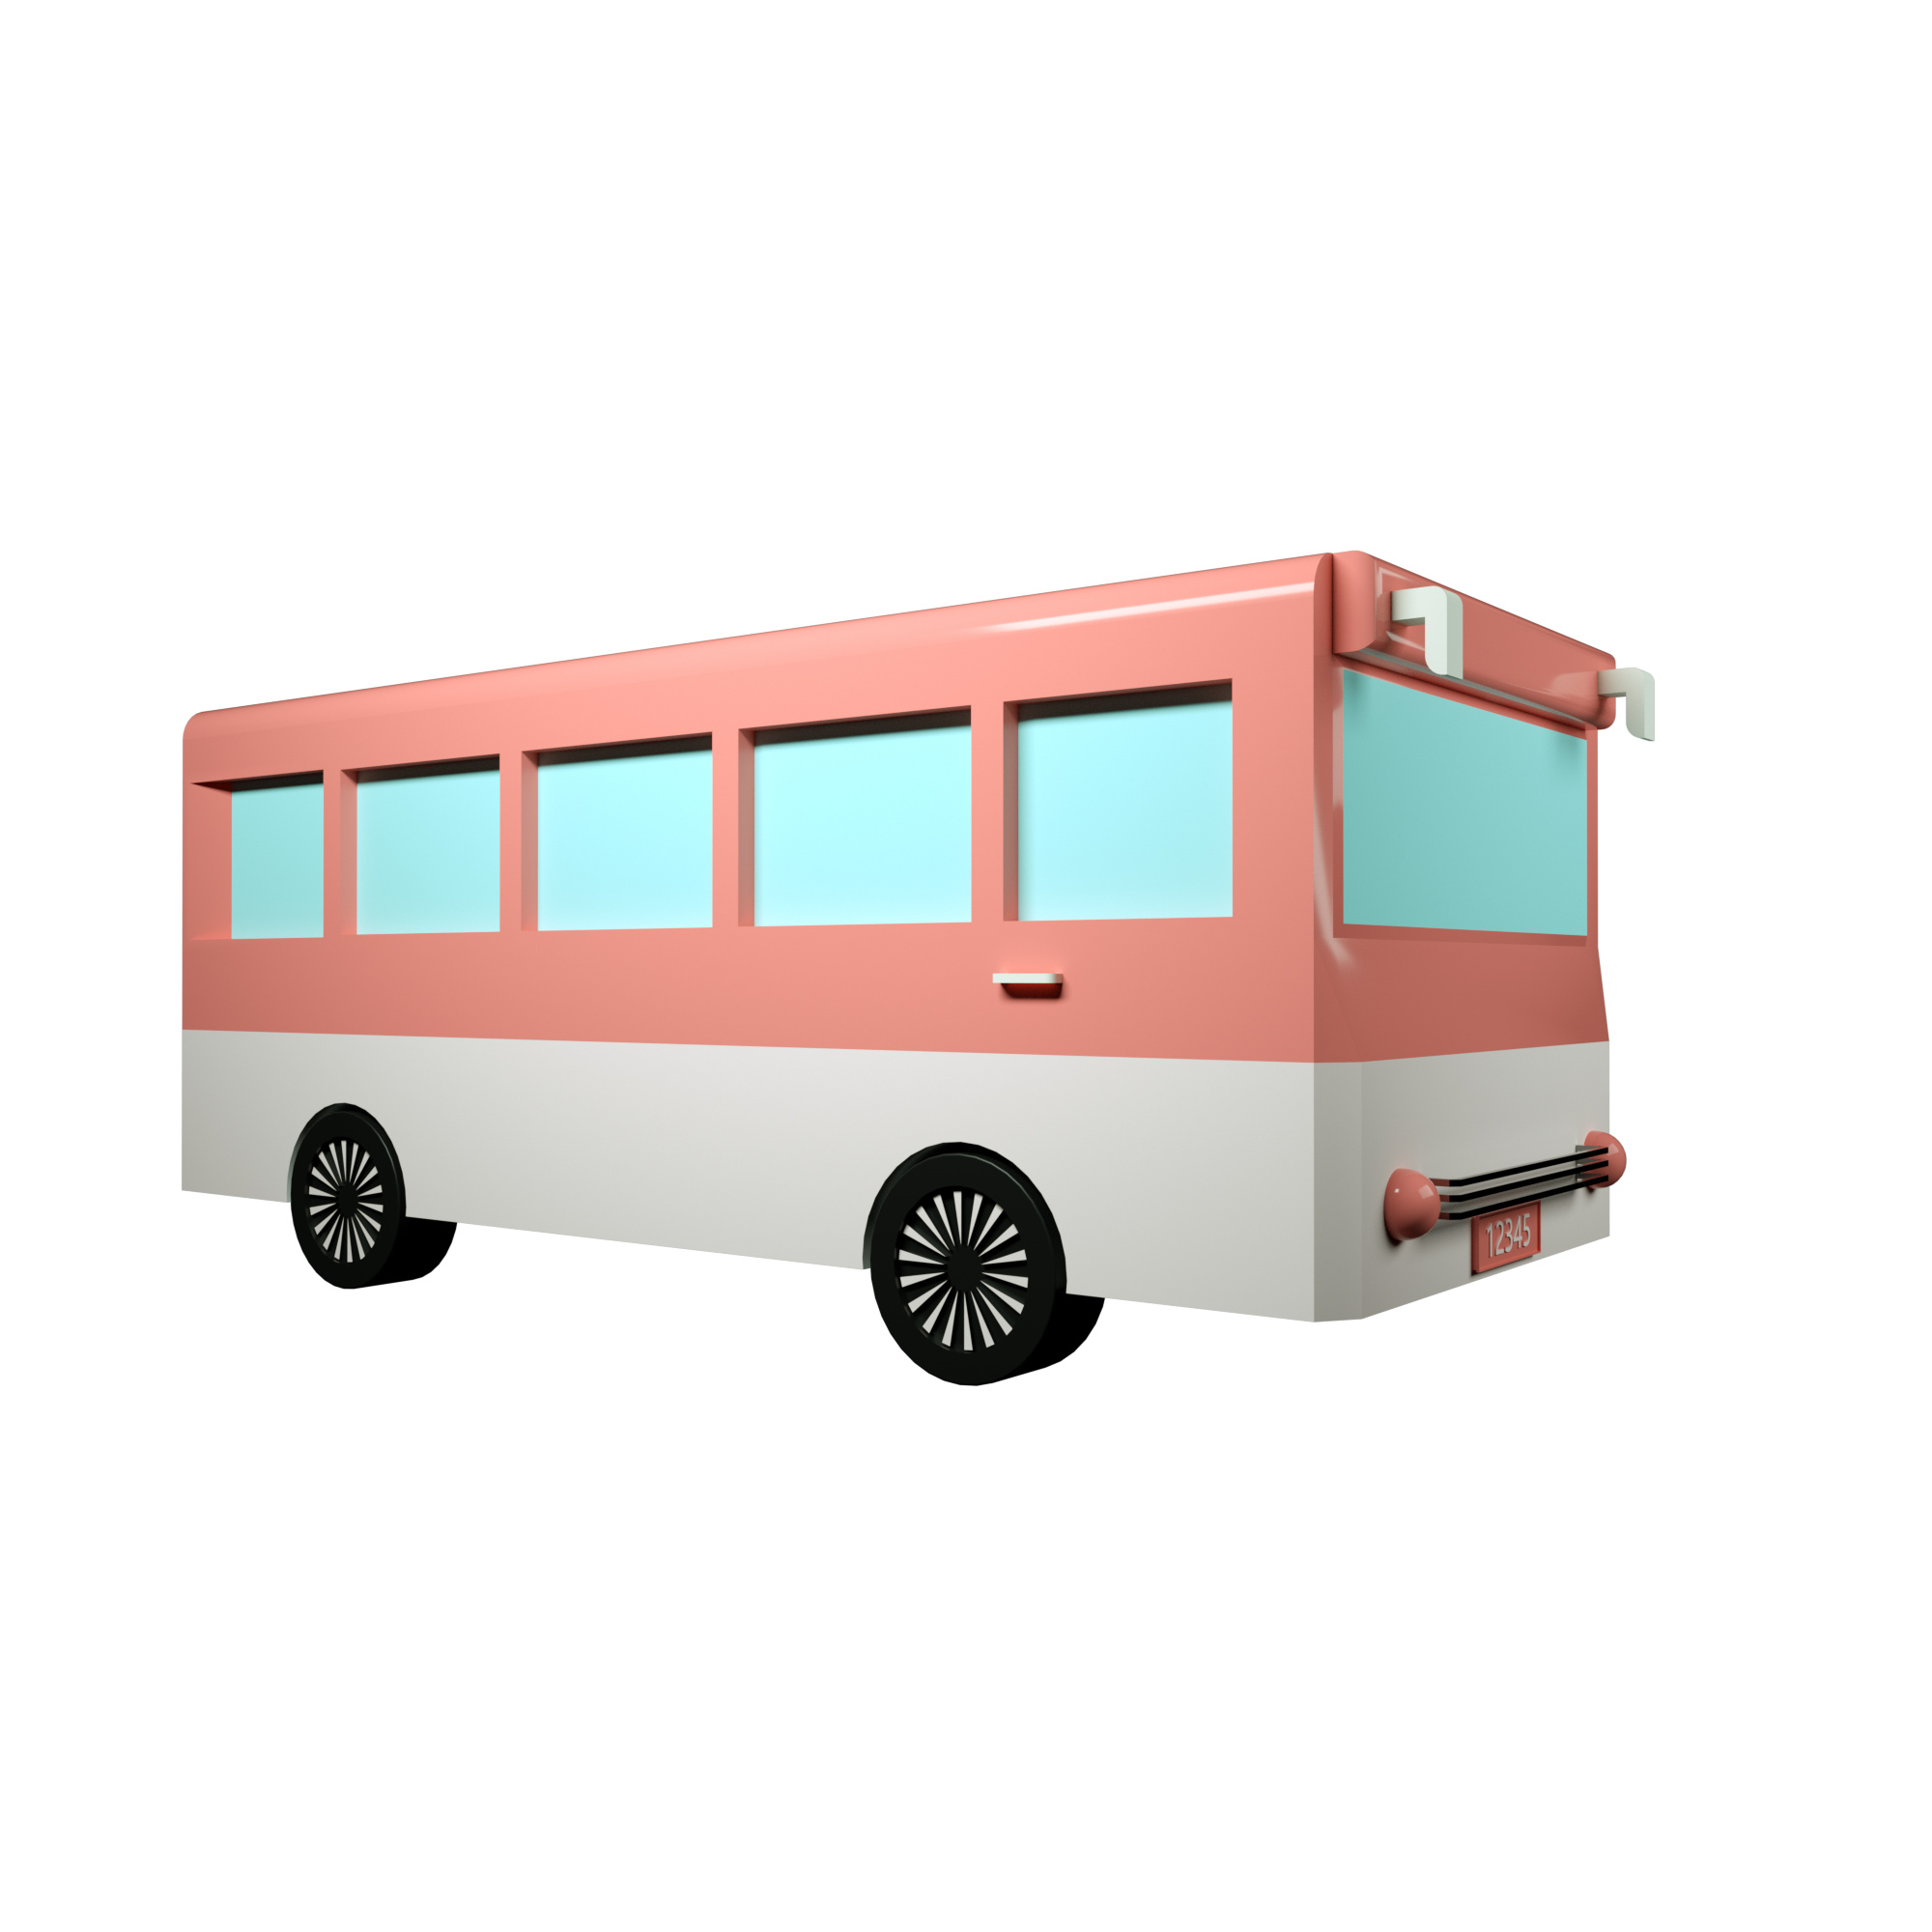 【UI】画一辆红色双层巴士吧！——Ai CC2017_哔哩哔哩 (゜-゜)つロ 干杯~-bilibili